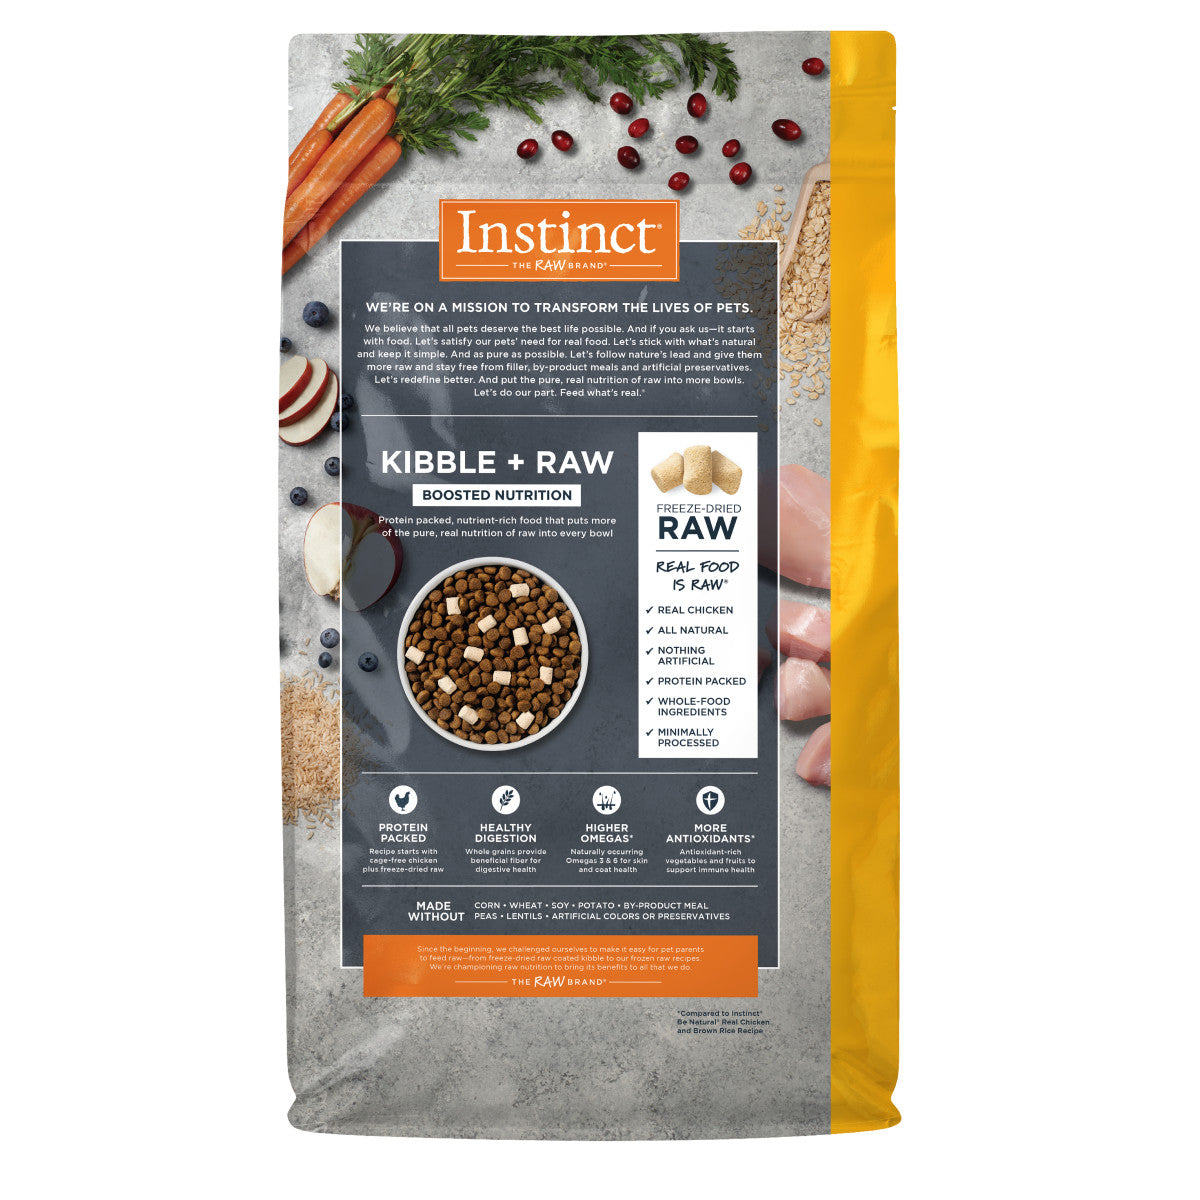 Instinct - Raw Boost Whole Grain Real Chicken & Brown Rice Recipe